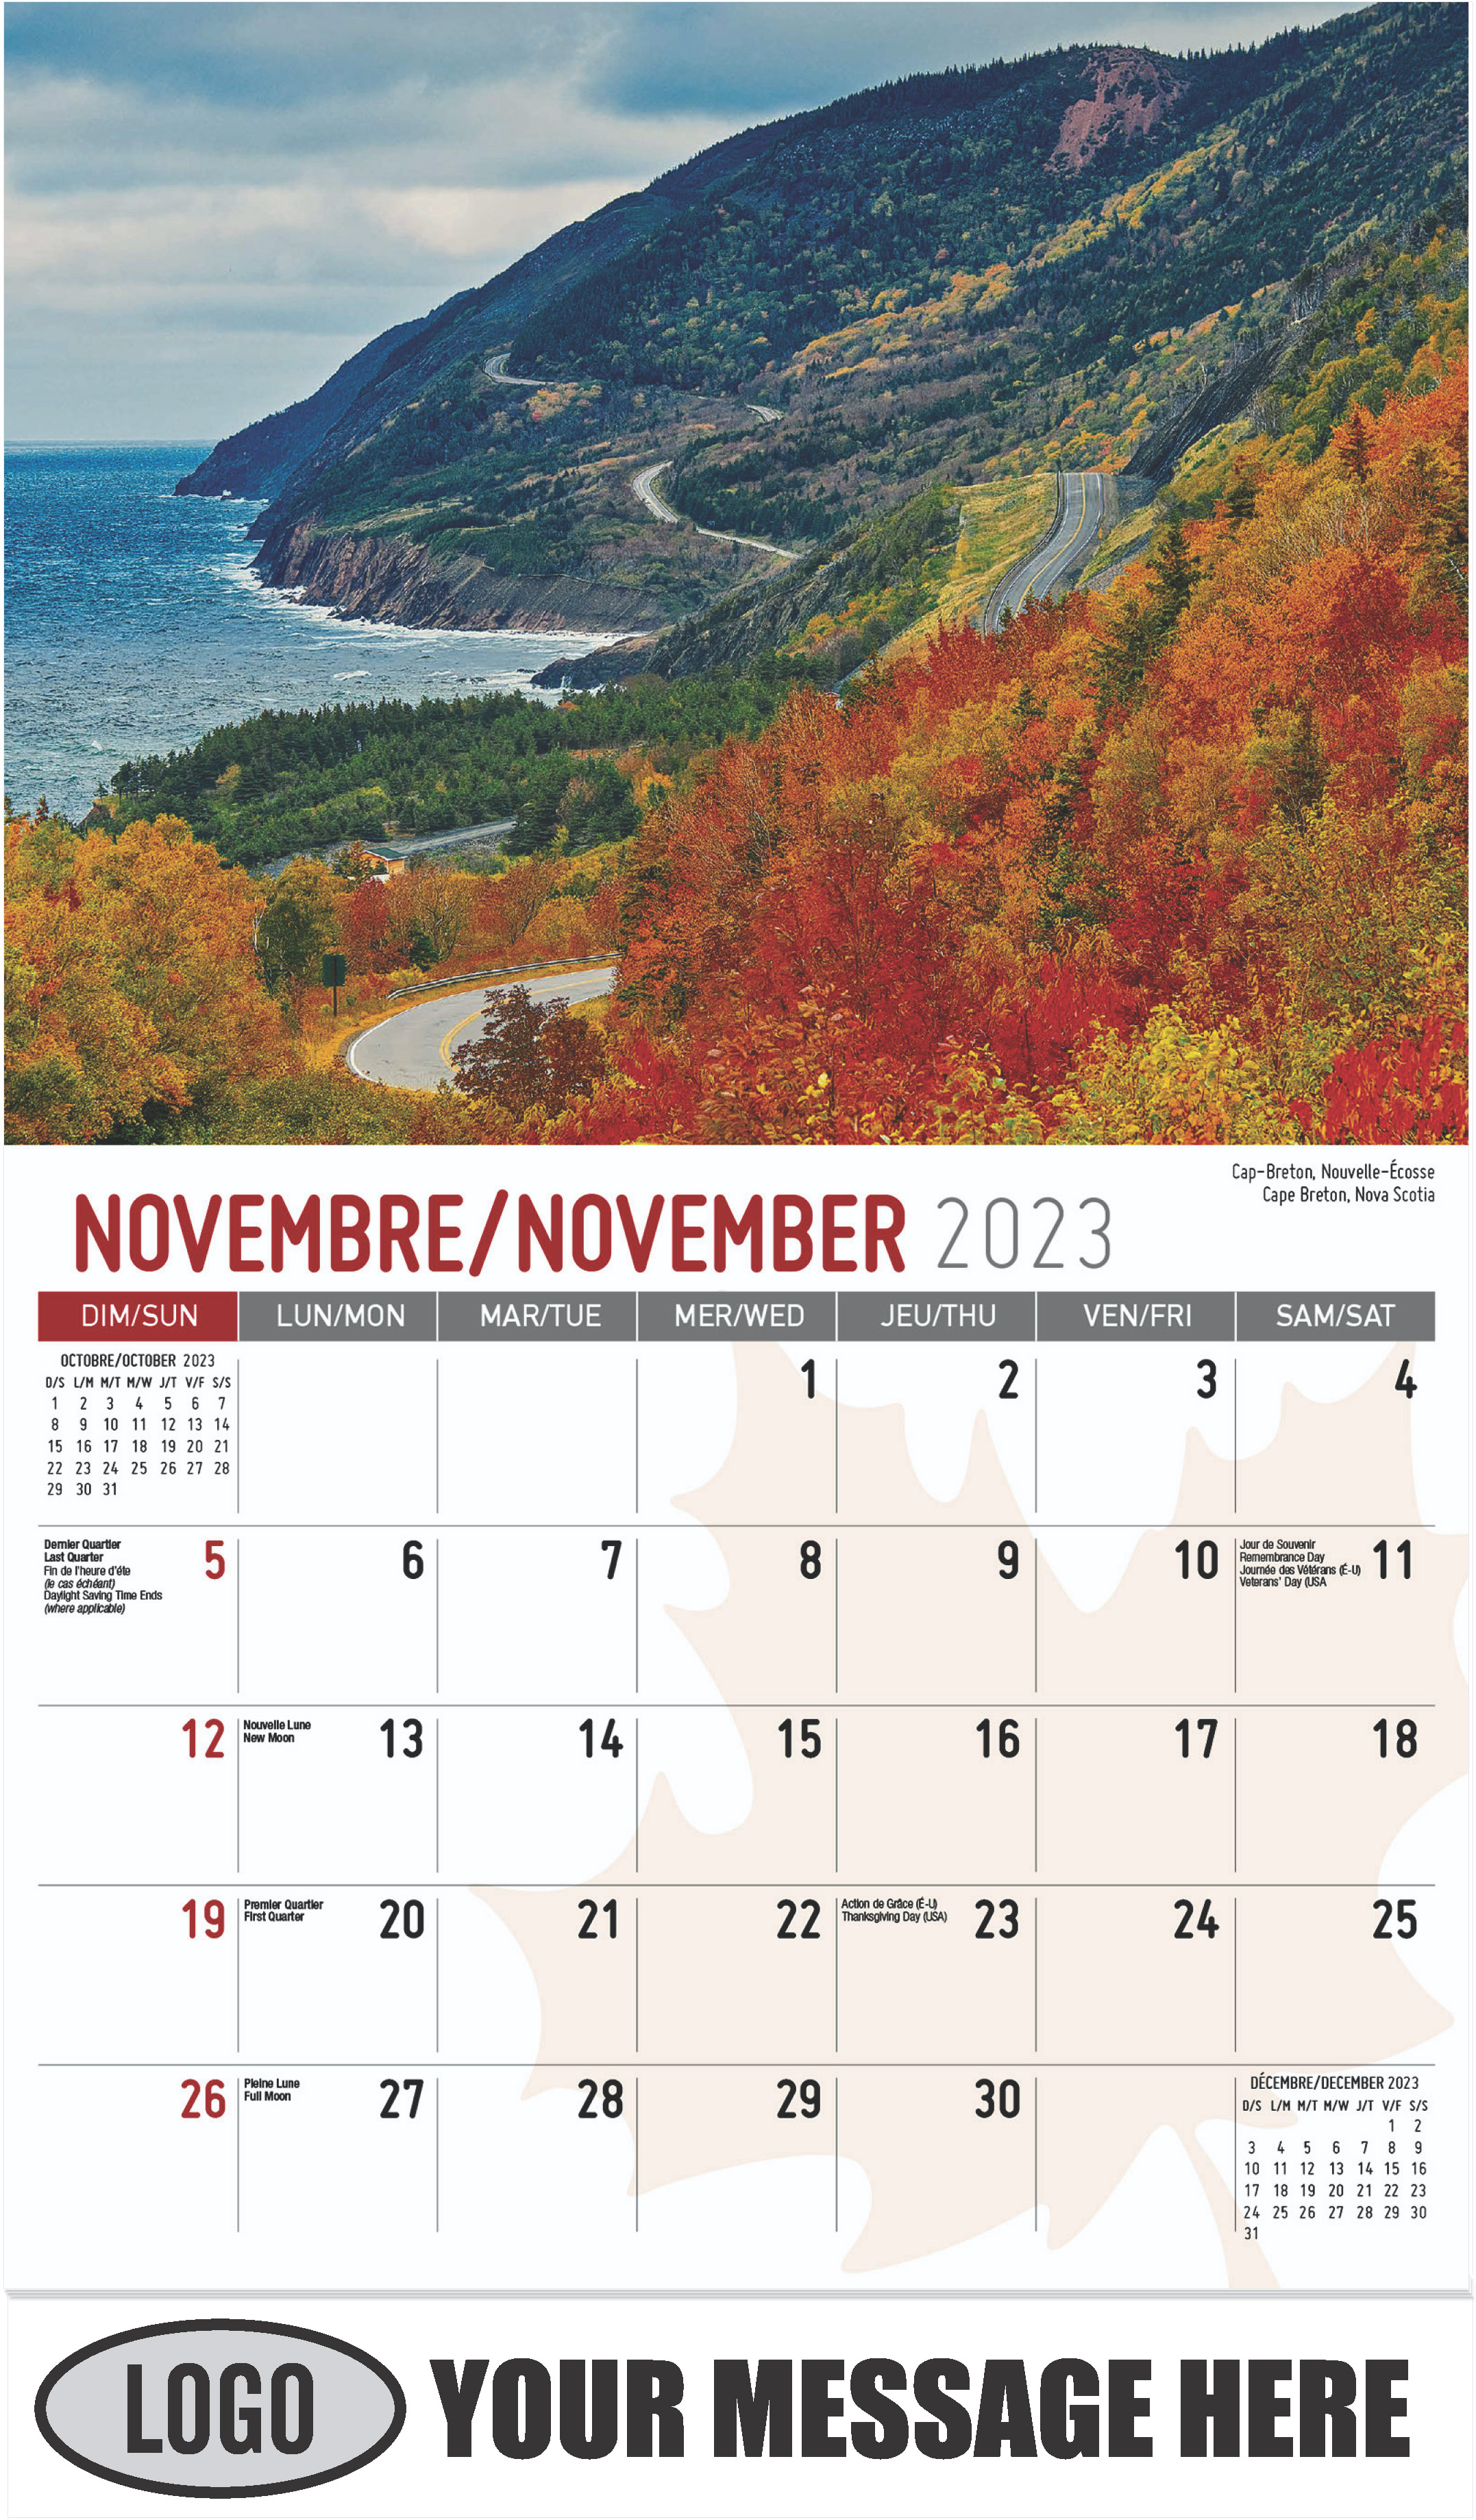 Cape Breton, Nova Scotia - November - Scenes of Canada(French-English bilingual) 2023 Promotional Calendar